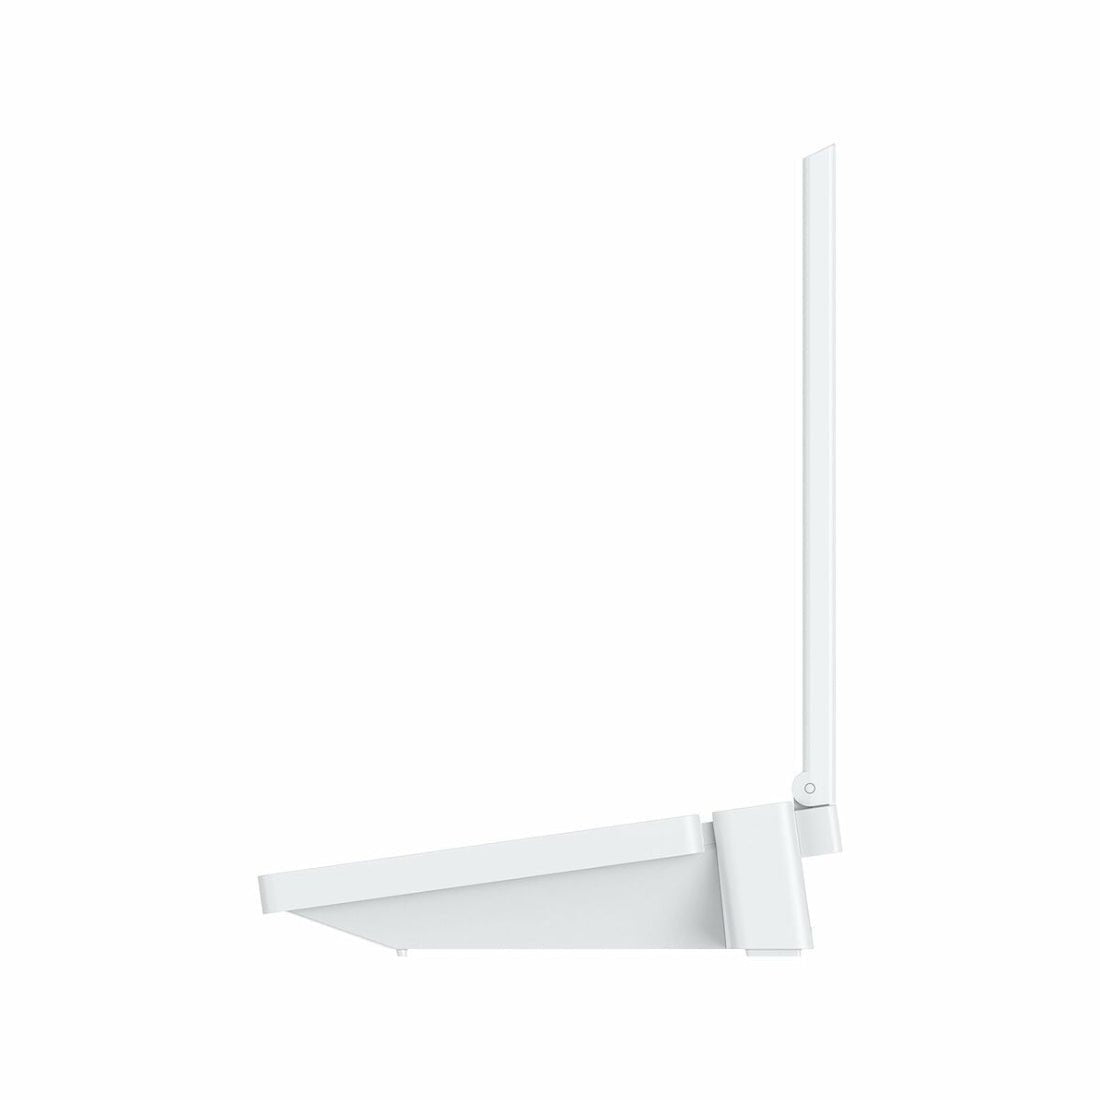 Xiaomi Mi AX3000T Wireless Router - White - راوتر - Store 974 | ستور ٩٧٤